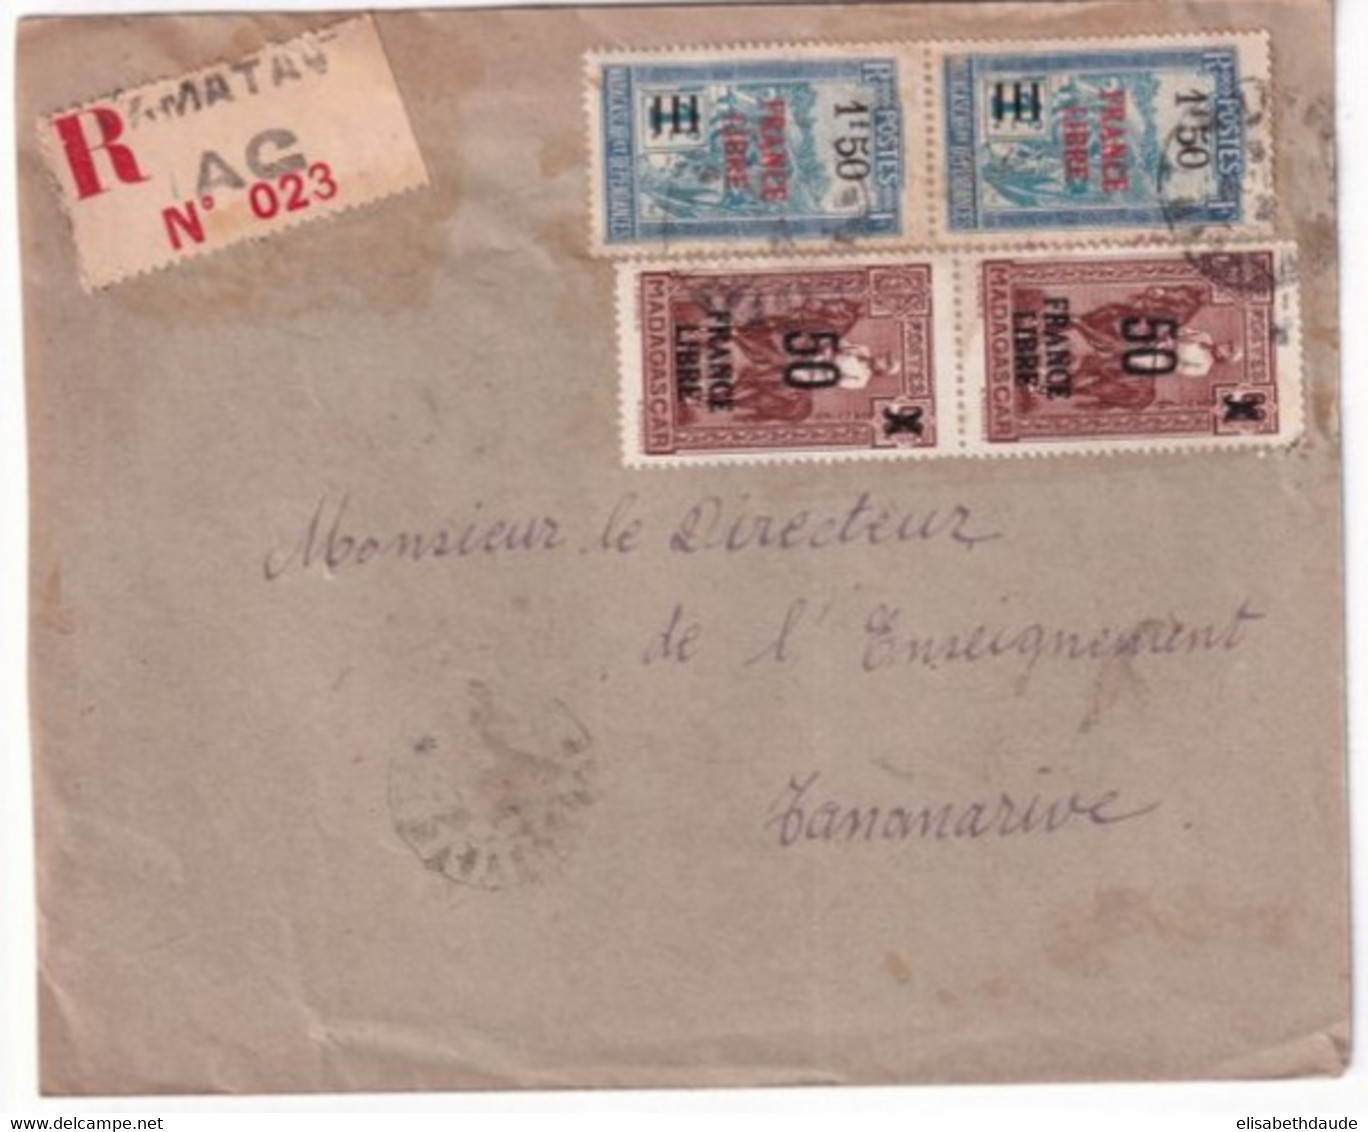 MADAGASCAR - 1943 - ENVELOPPE RECOMMANDEE De TAMATAVE => TANANARIVE - Briefe U. Dokumente